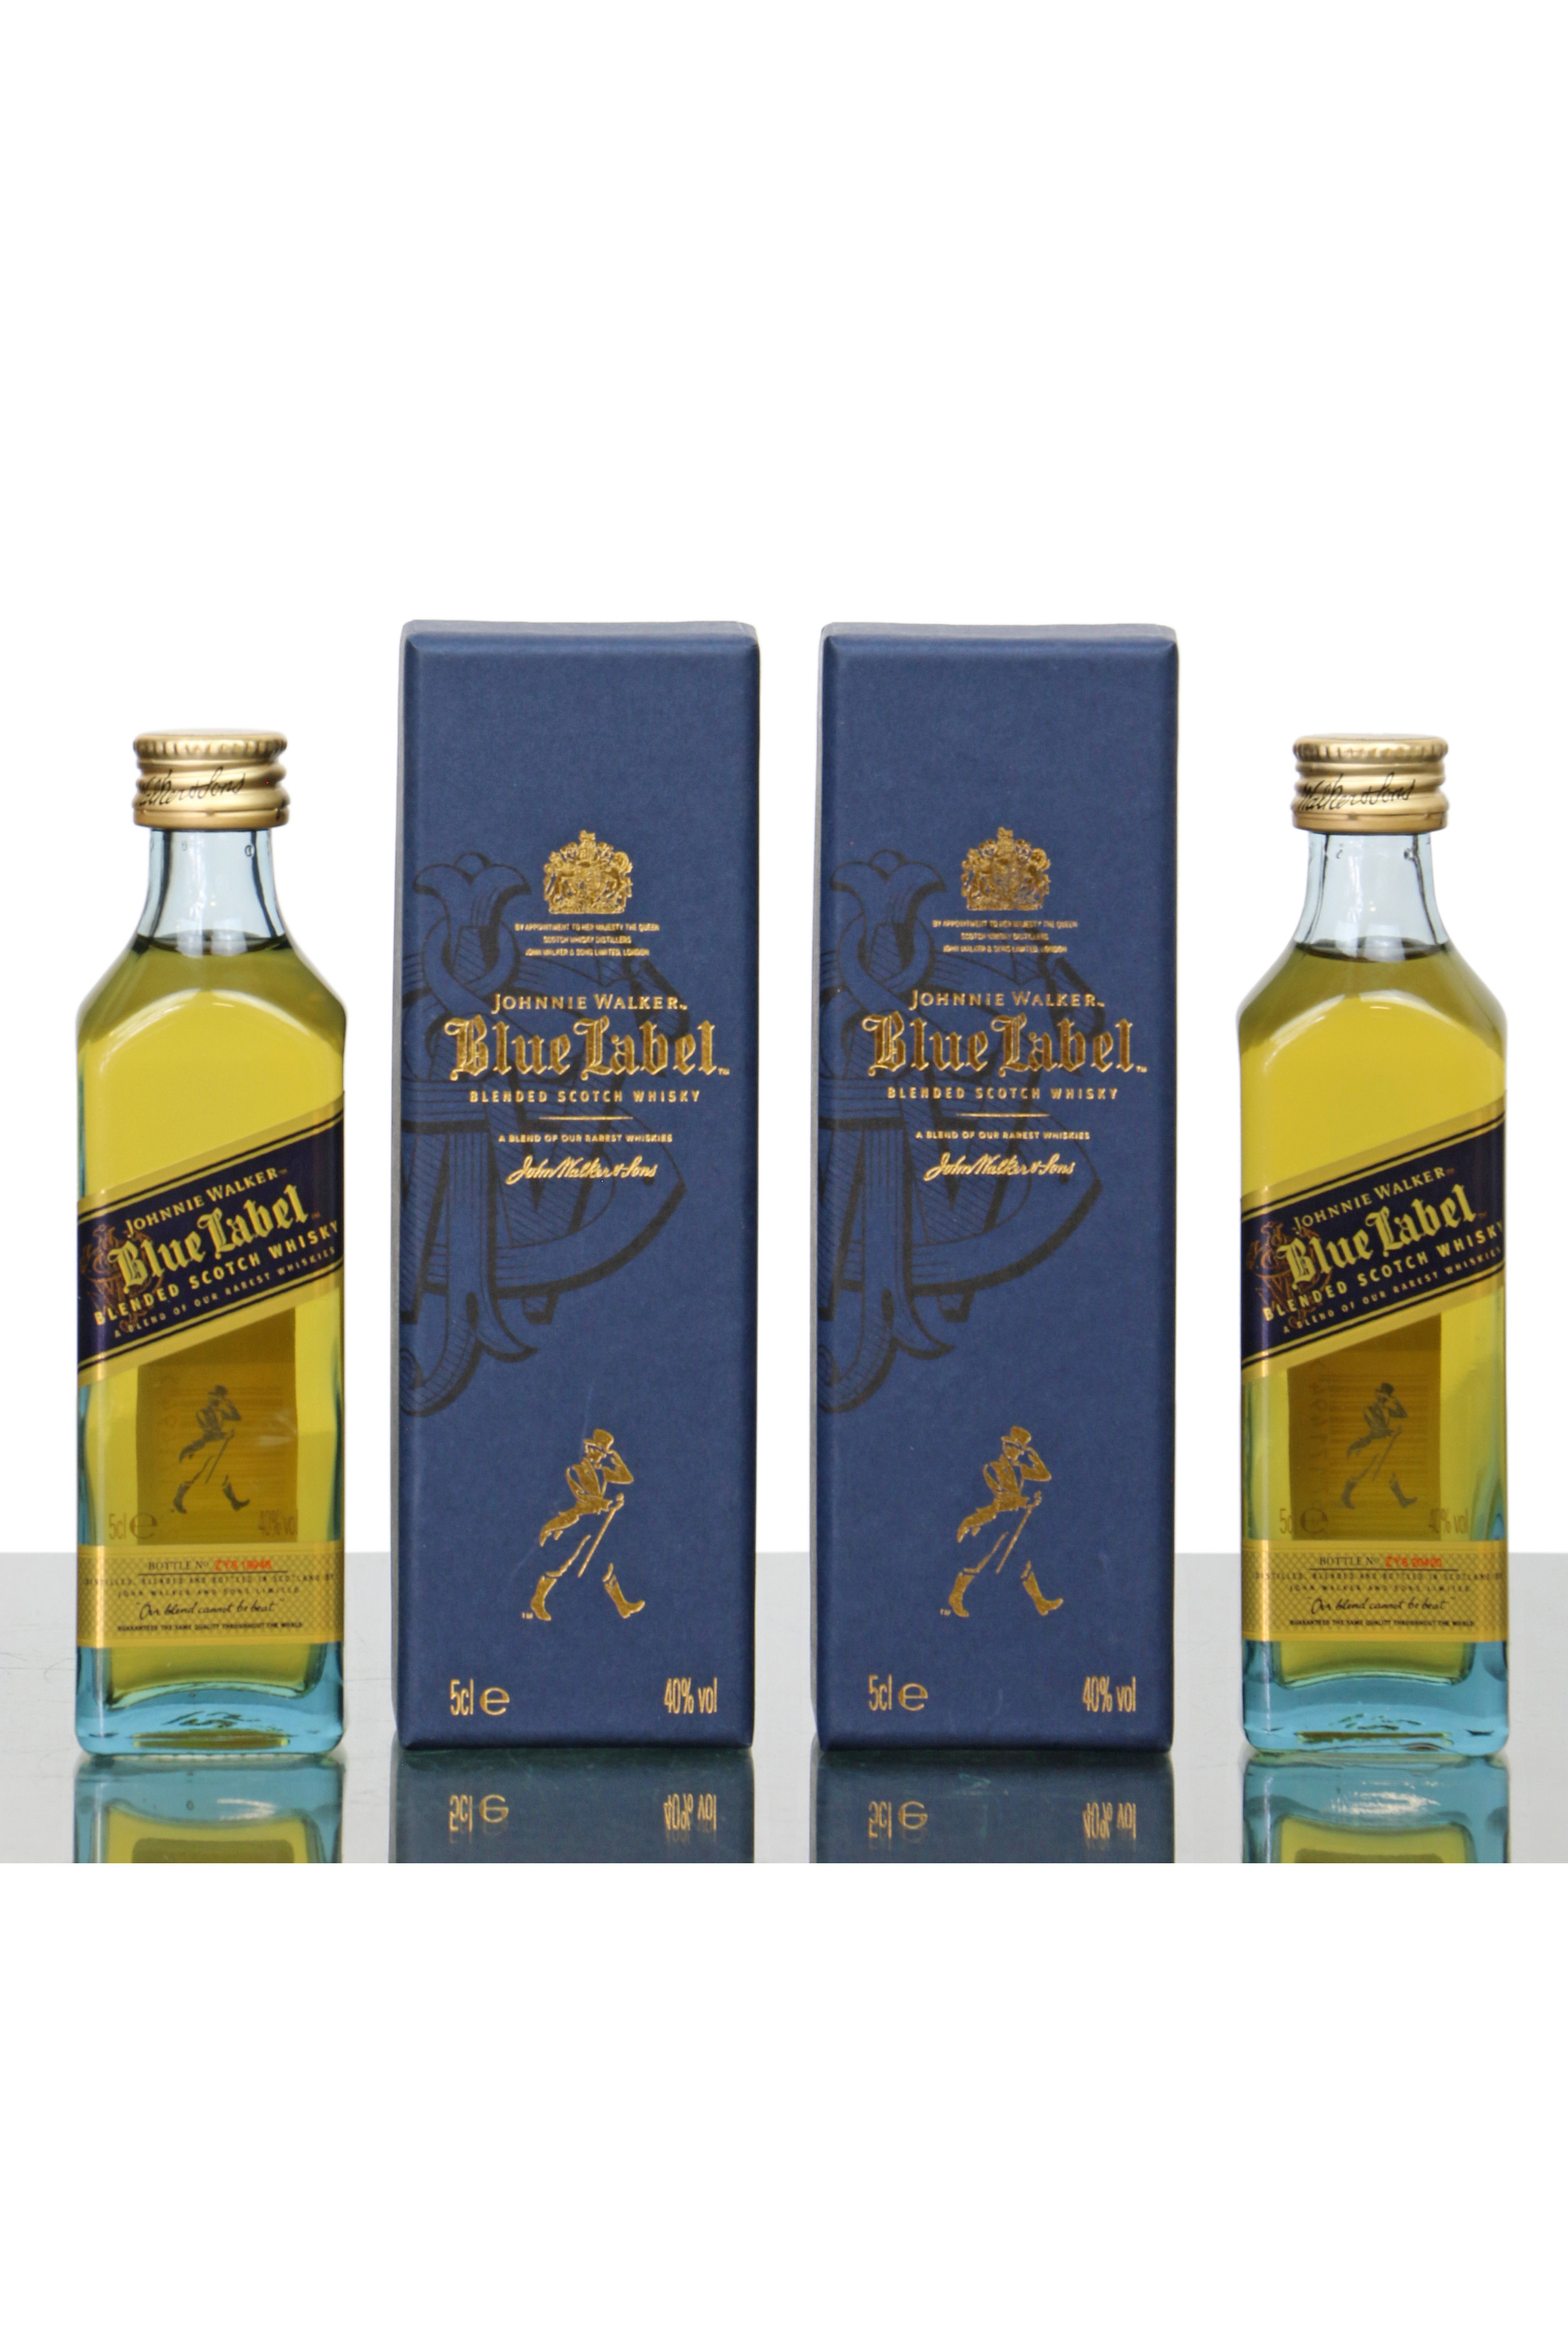 Johnnie Walker Blue Label Miniature 5cl x 2  Just Whisky Auctions